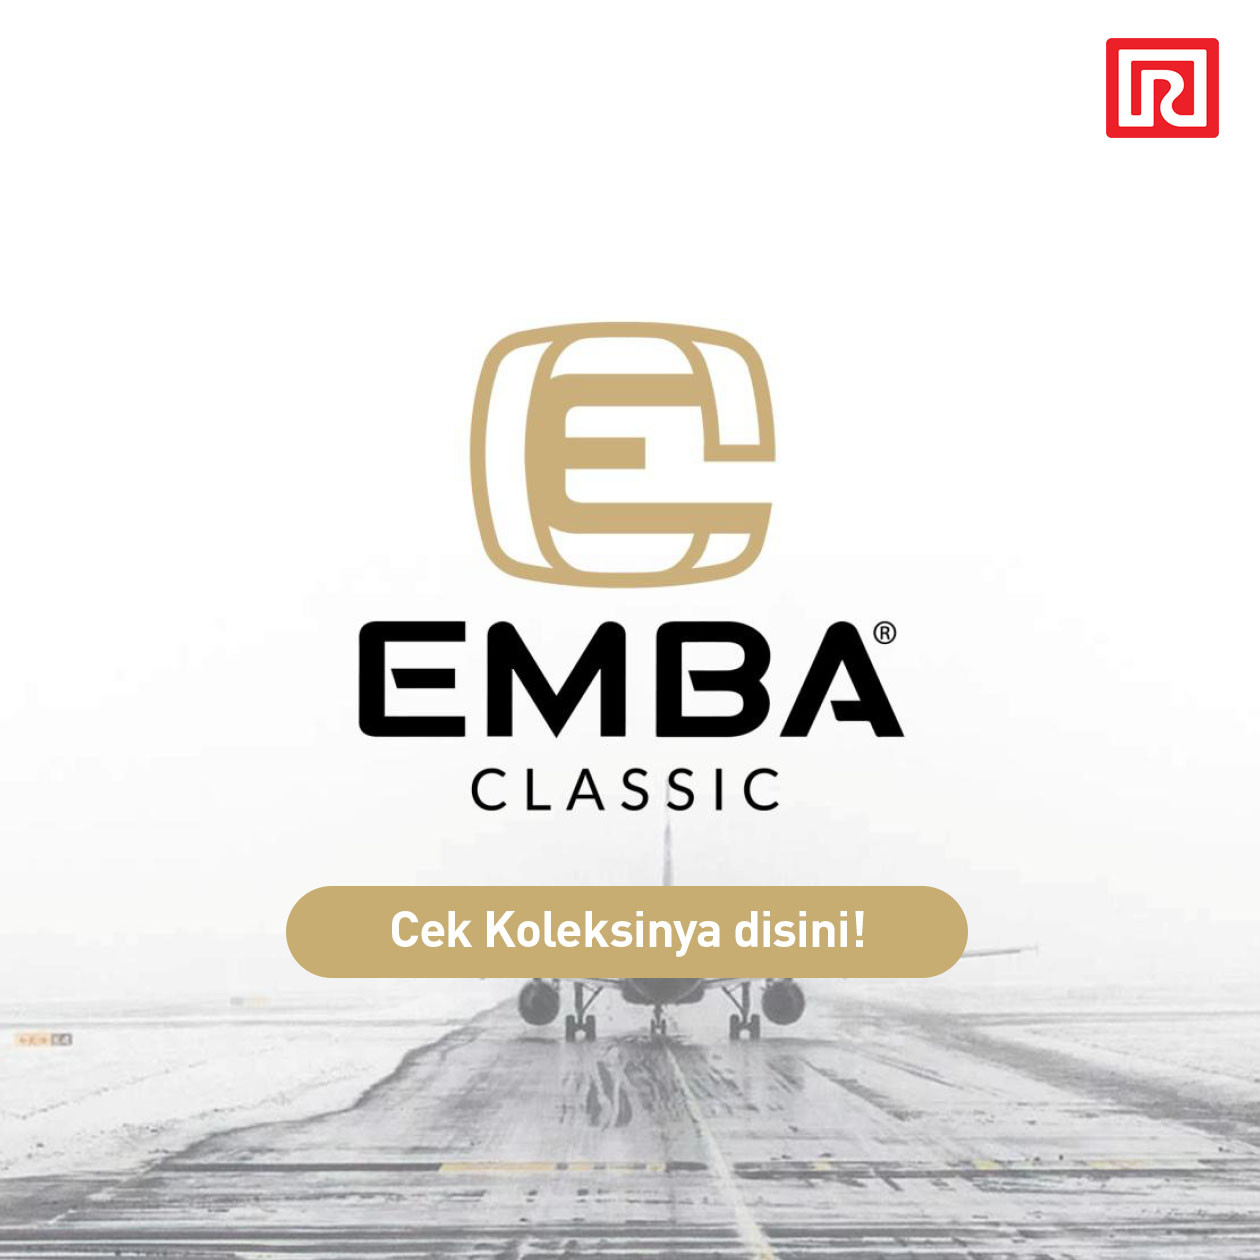 EMBA CLASSIC 2020